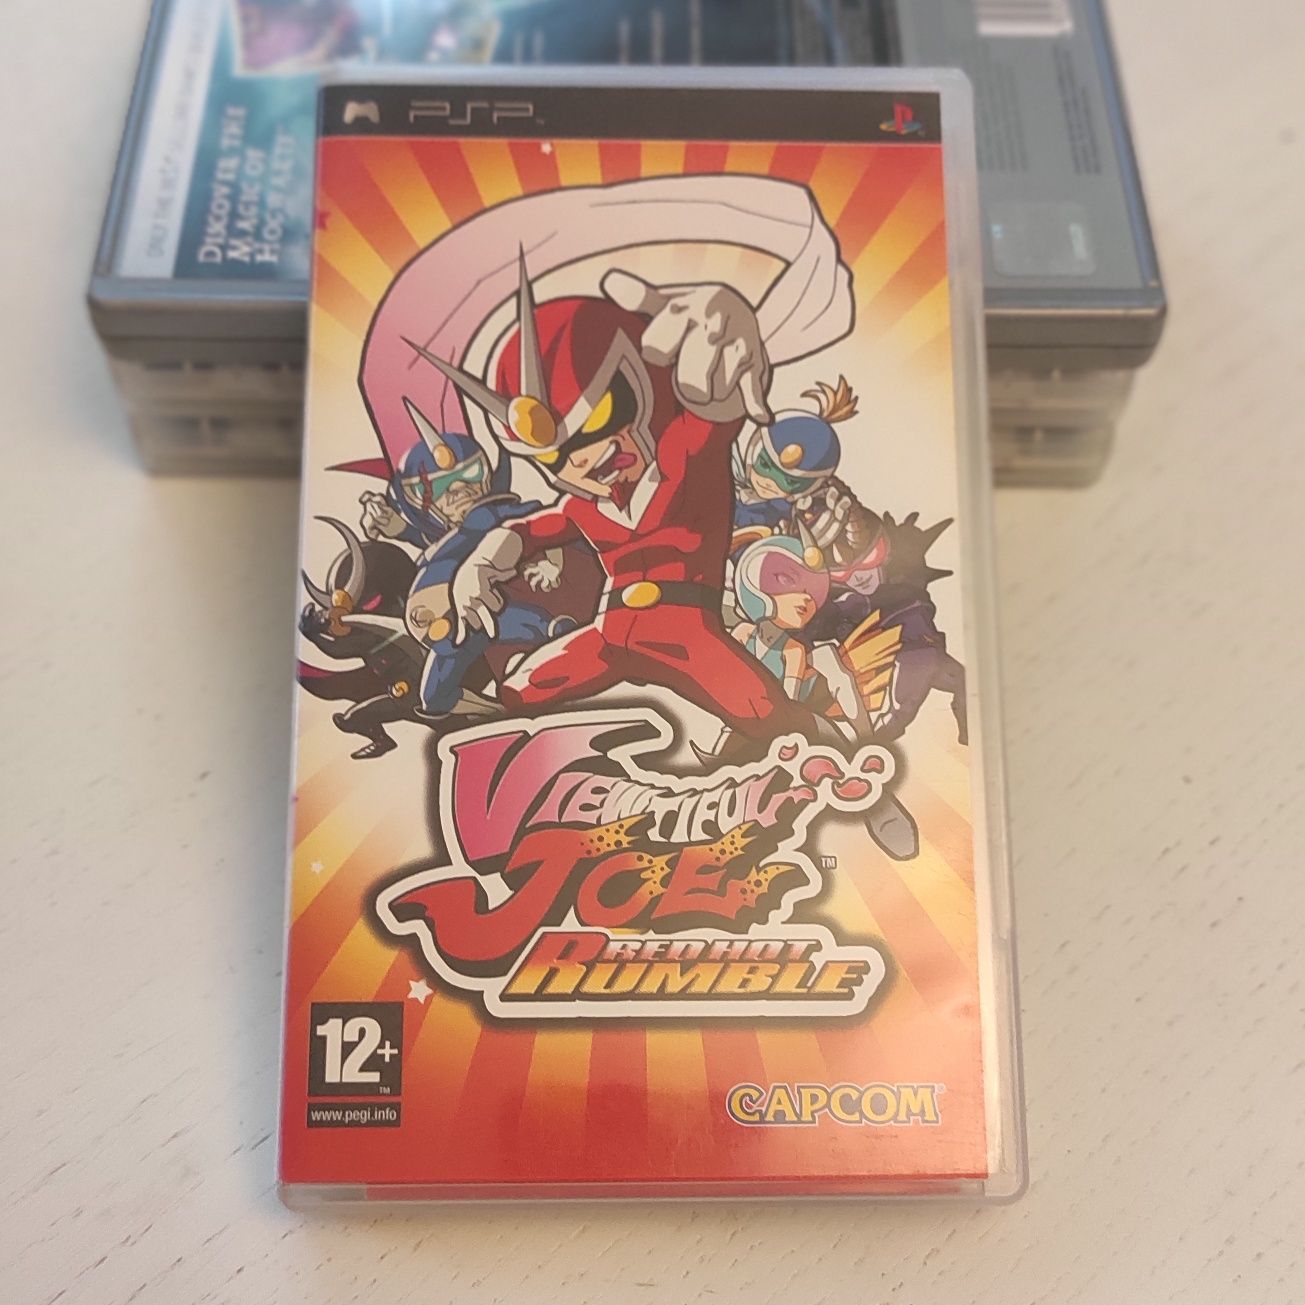 PSP Viewtiful Joe Red Hot Rumble